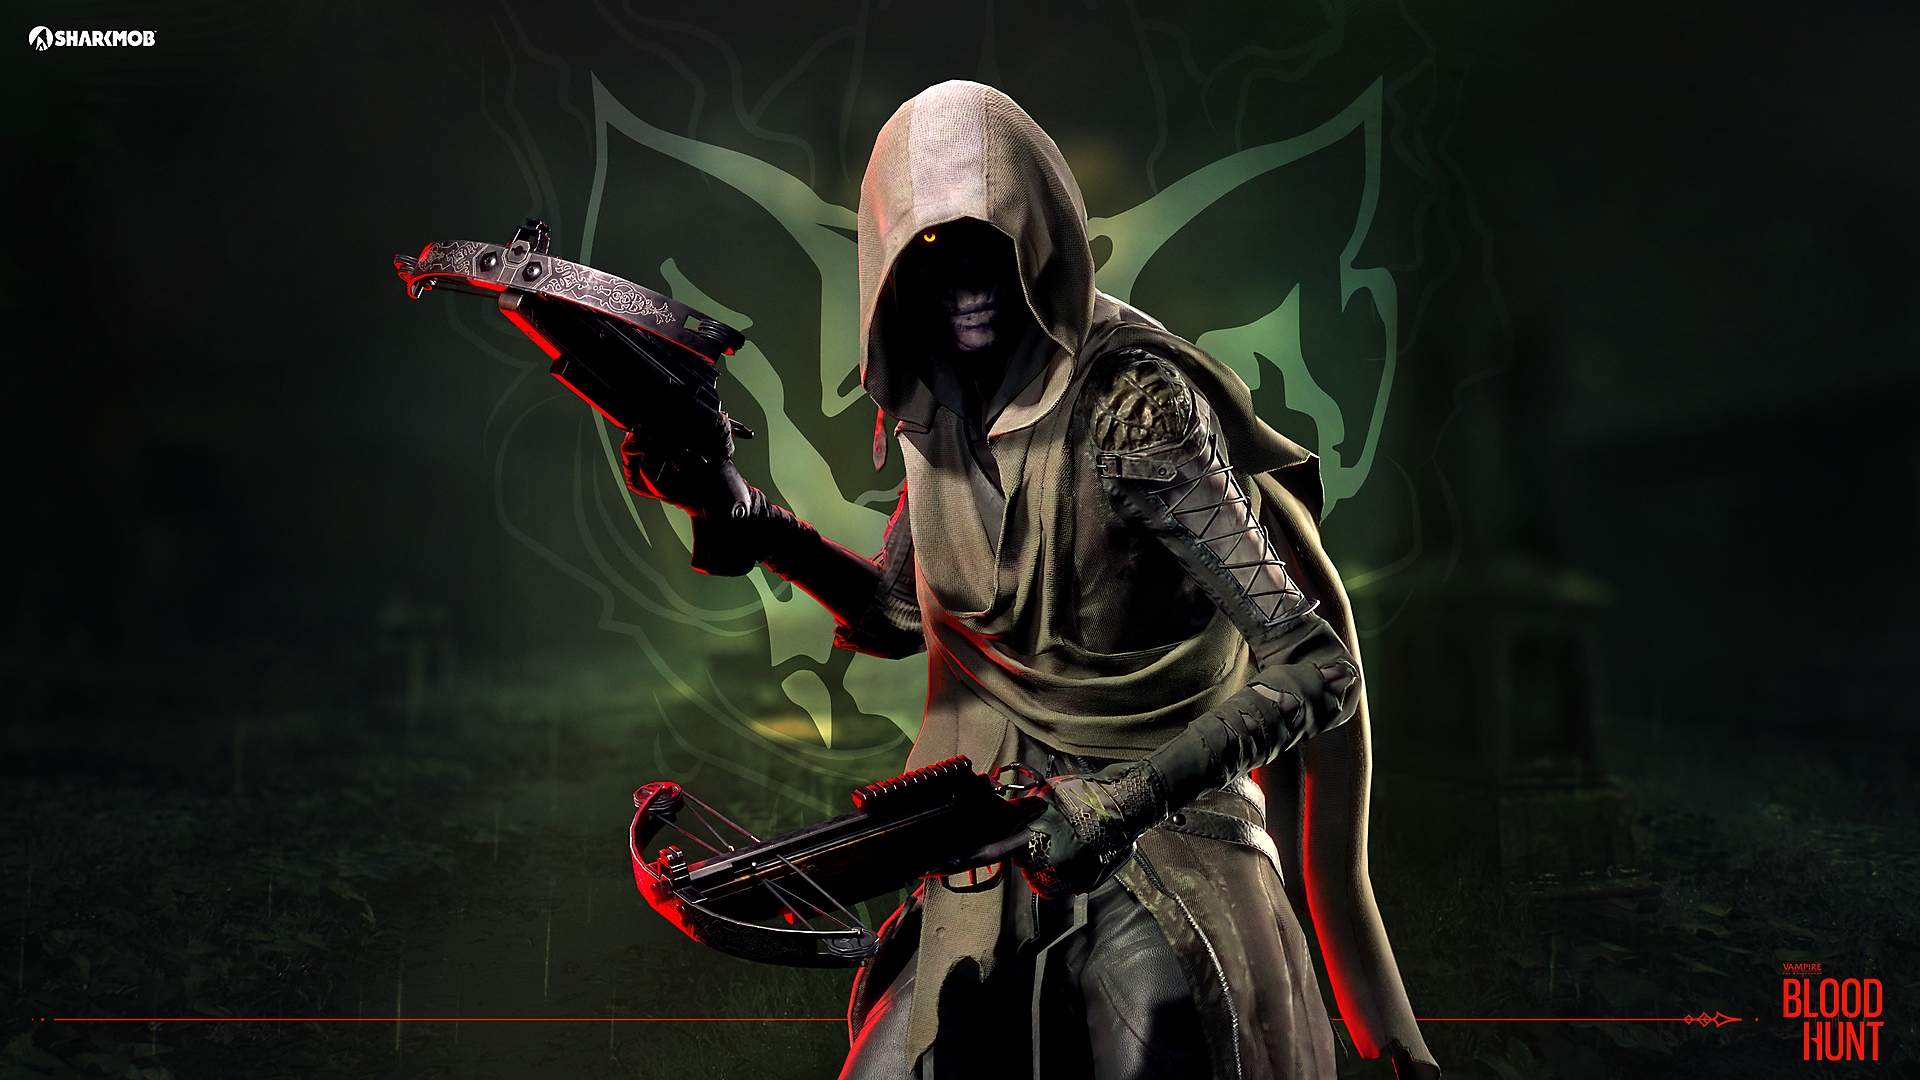 Vampire the Masquerade - Bloodhunt Archetype portrait image - Prowler